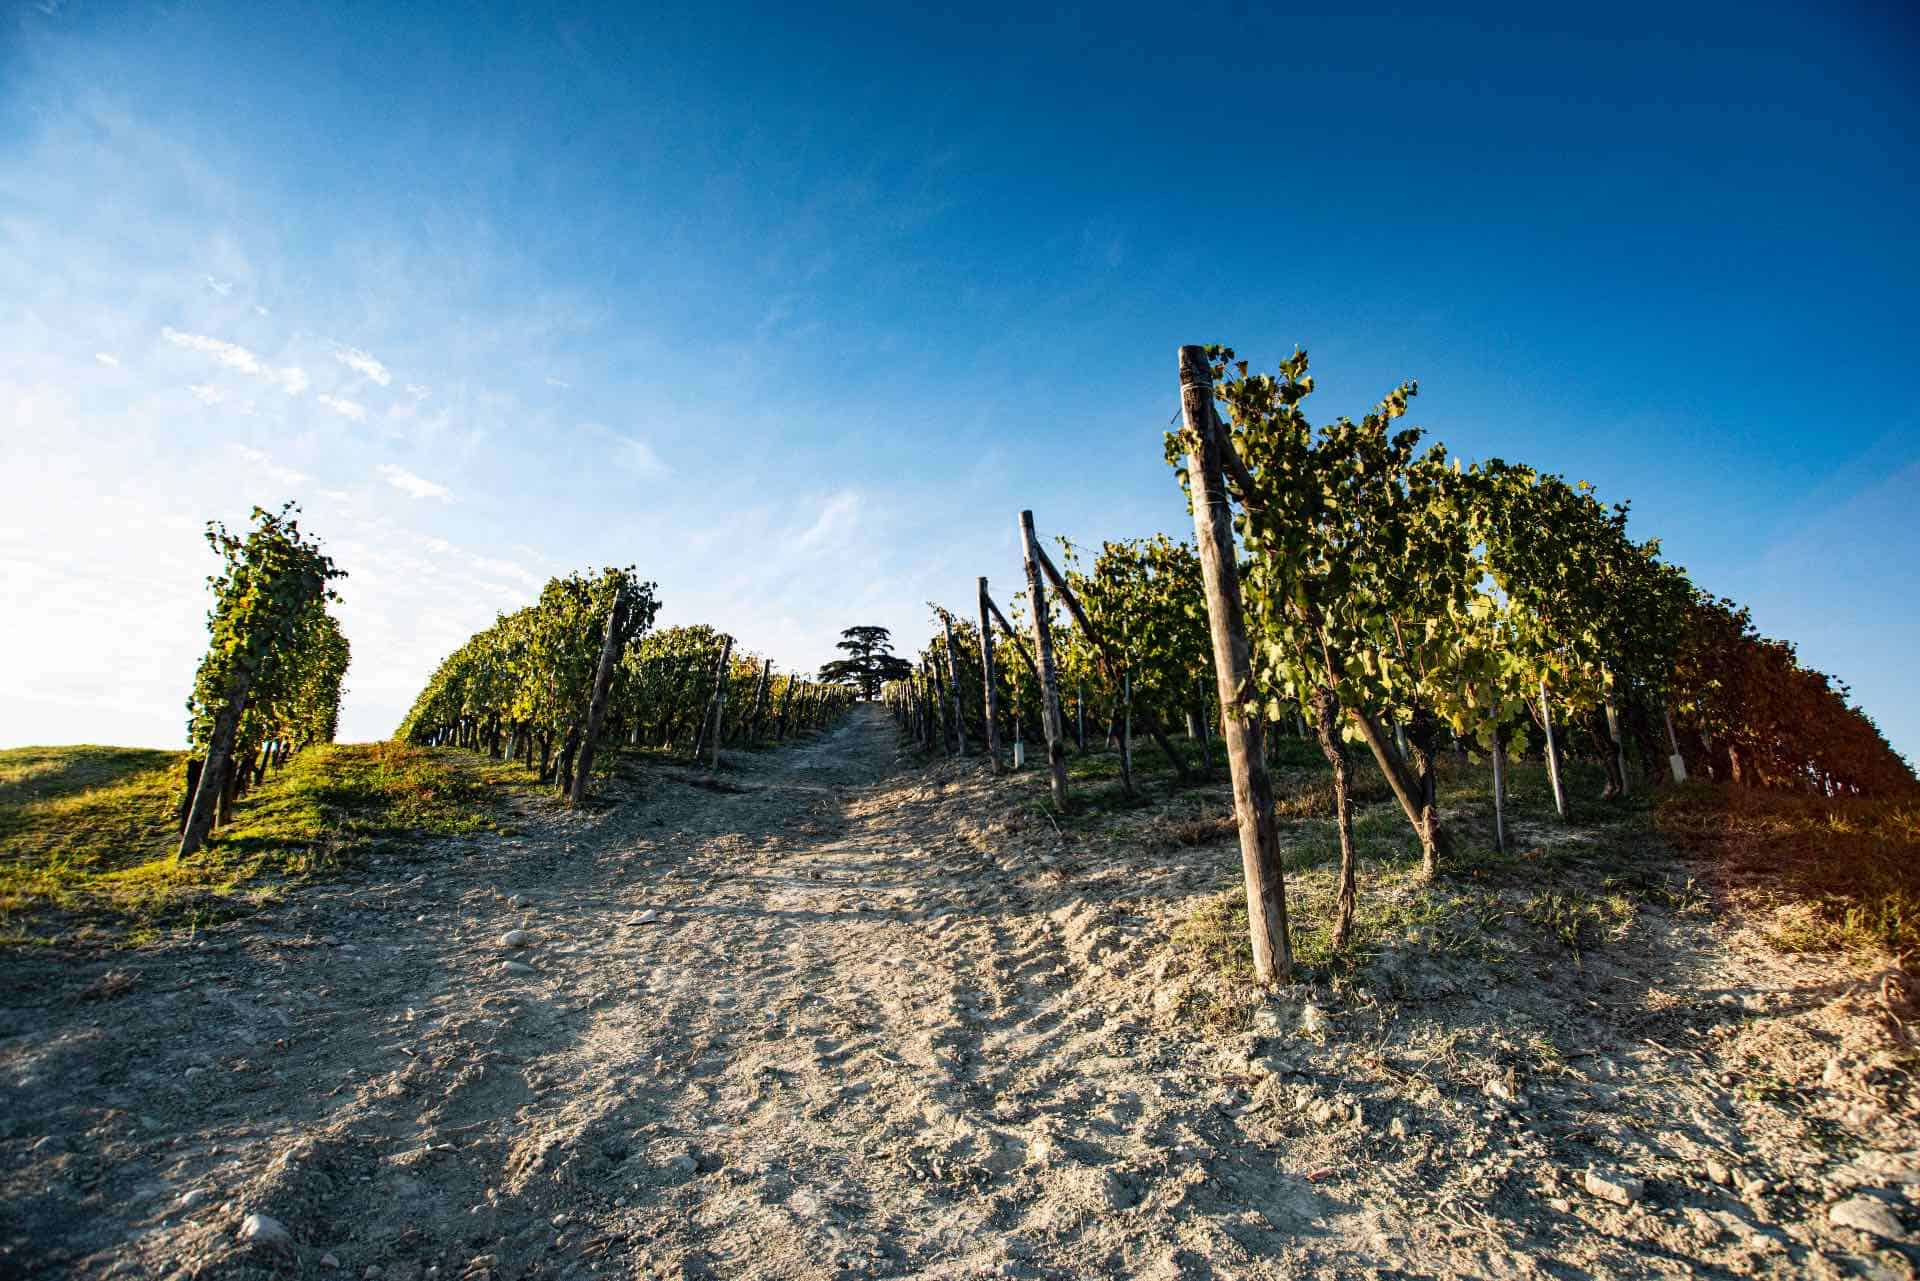 , Cordero di Montezemolo is an exemplar of viticulture six centuries in the making